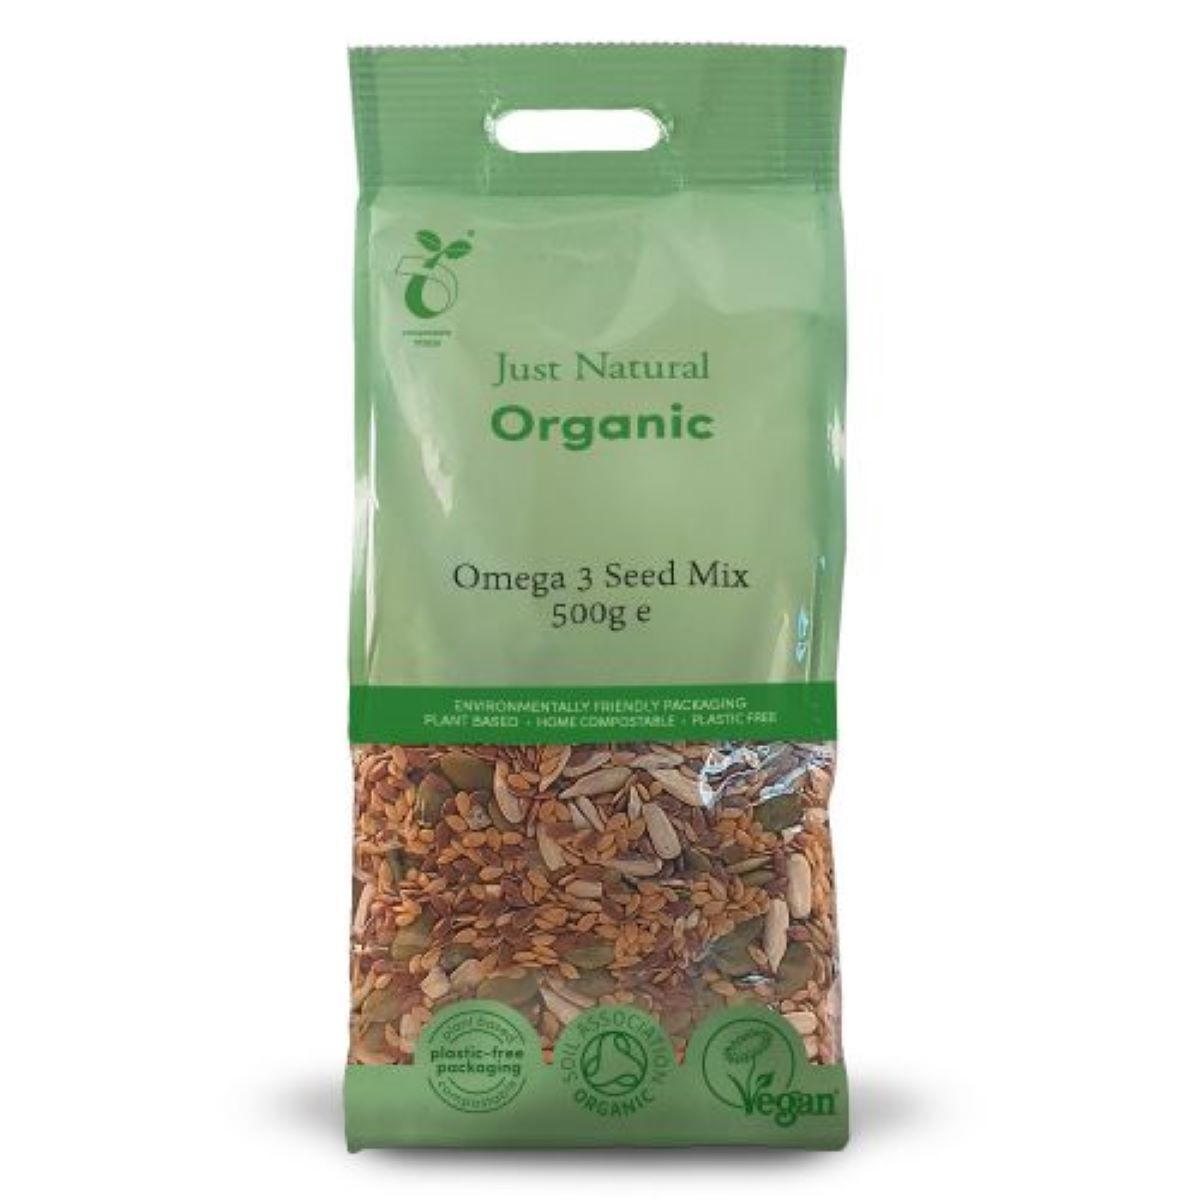 Just Natural Organic Omega 3 Seeds Mix 500g